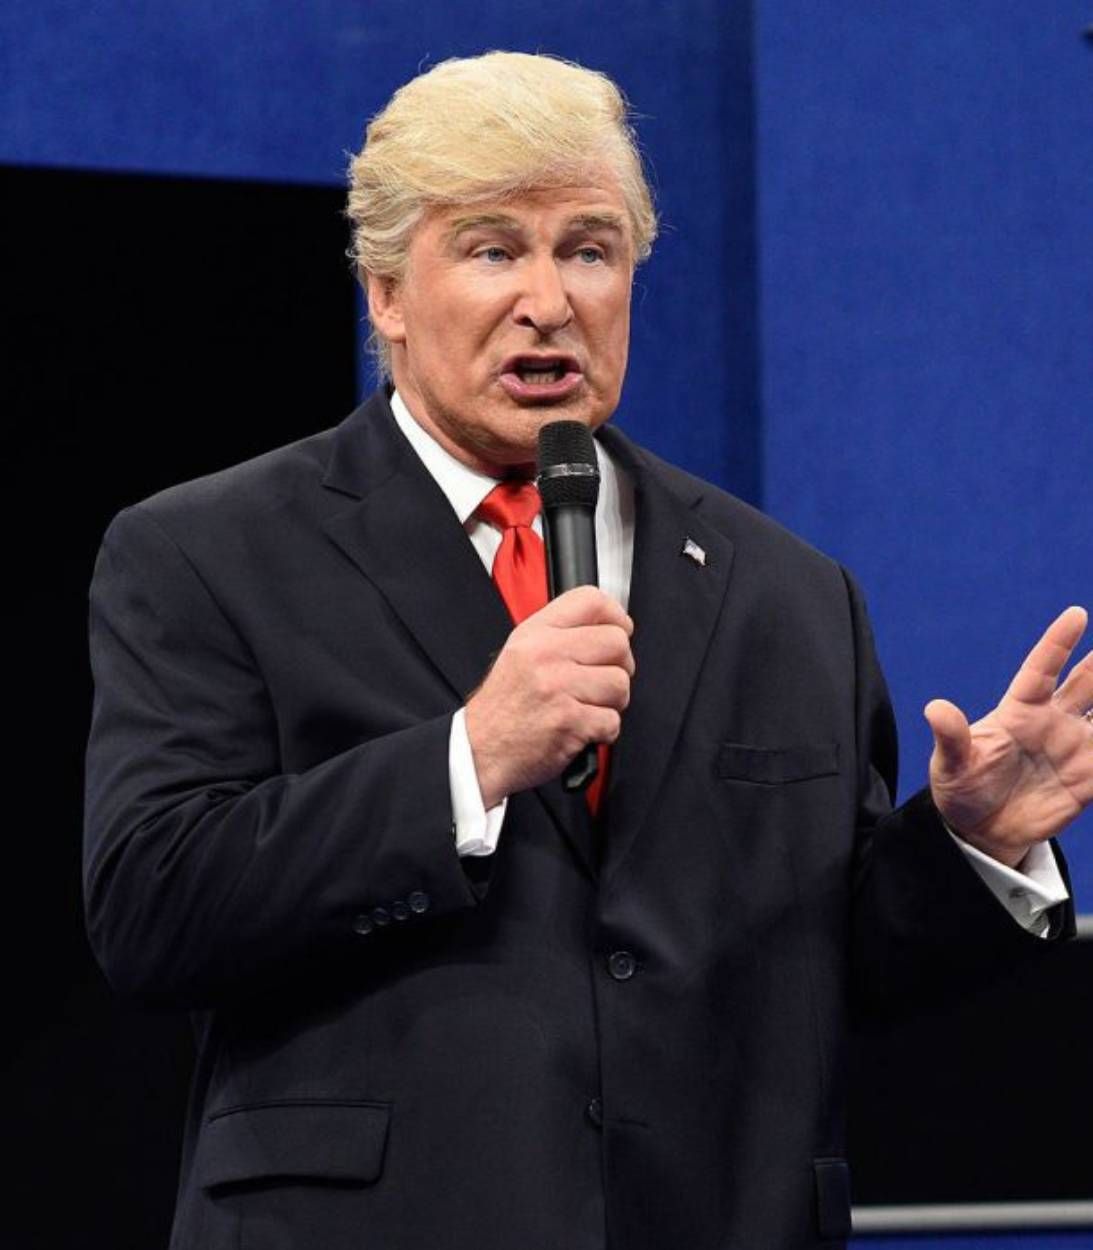 Alec Baldwin as Donald Trump on SNL pic vertical